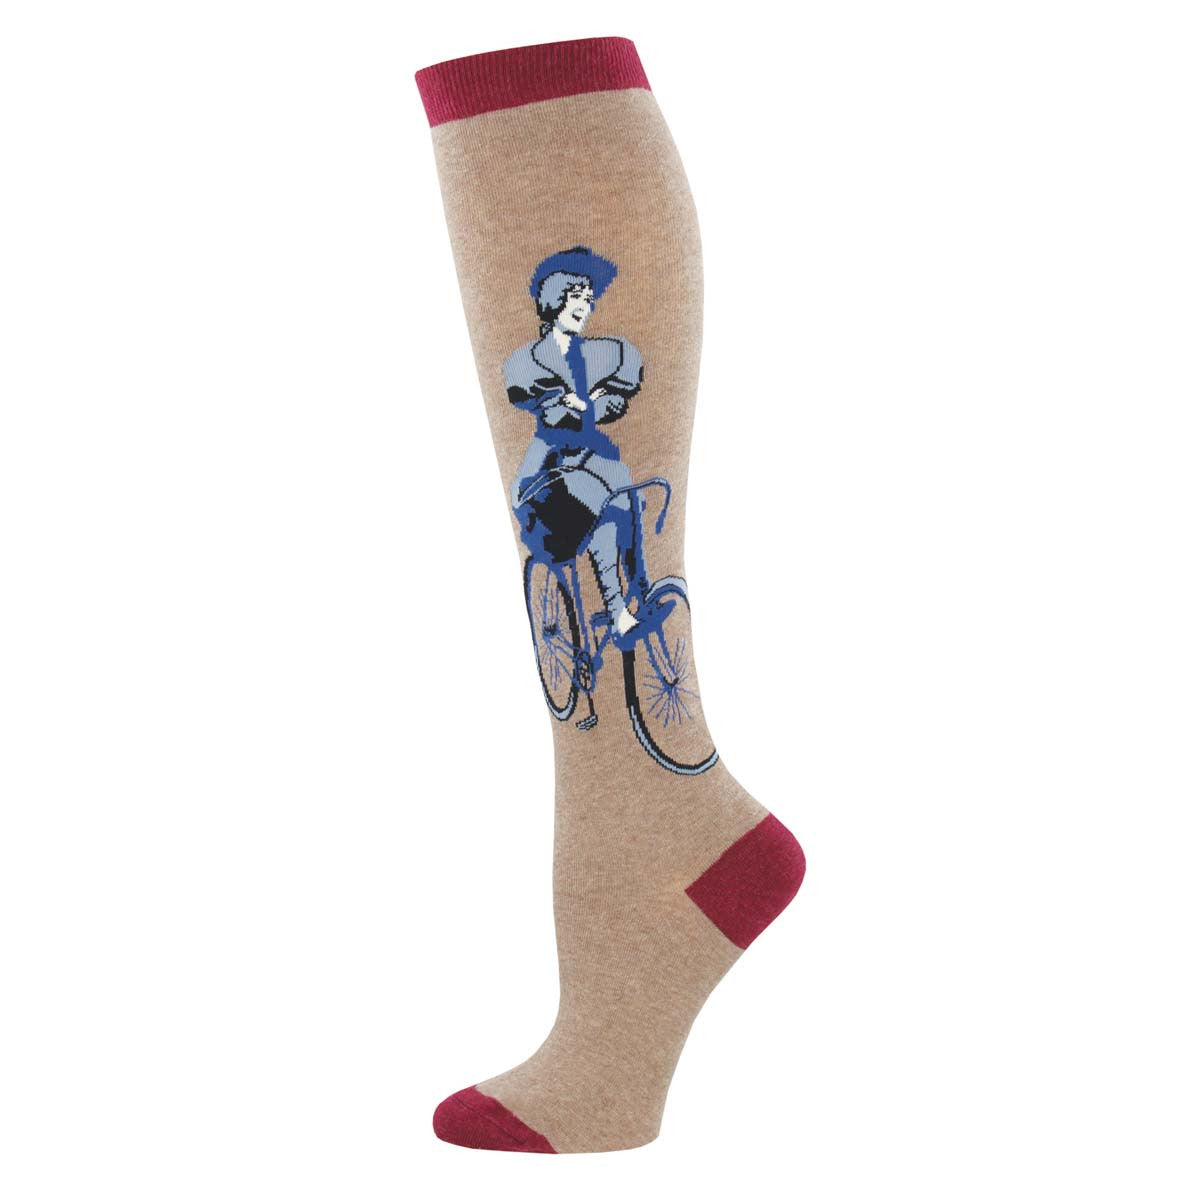 Victorian Lady Riding Bicylce Knee High Socks